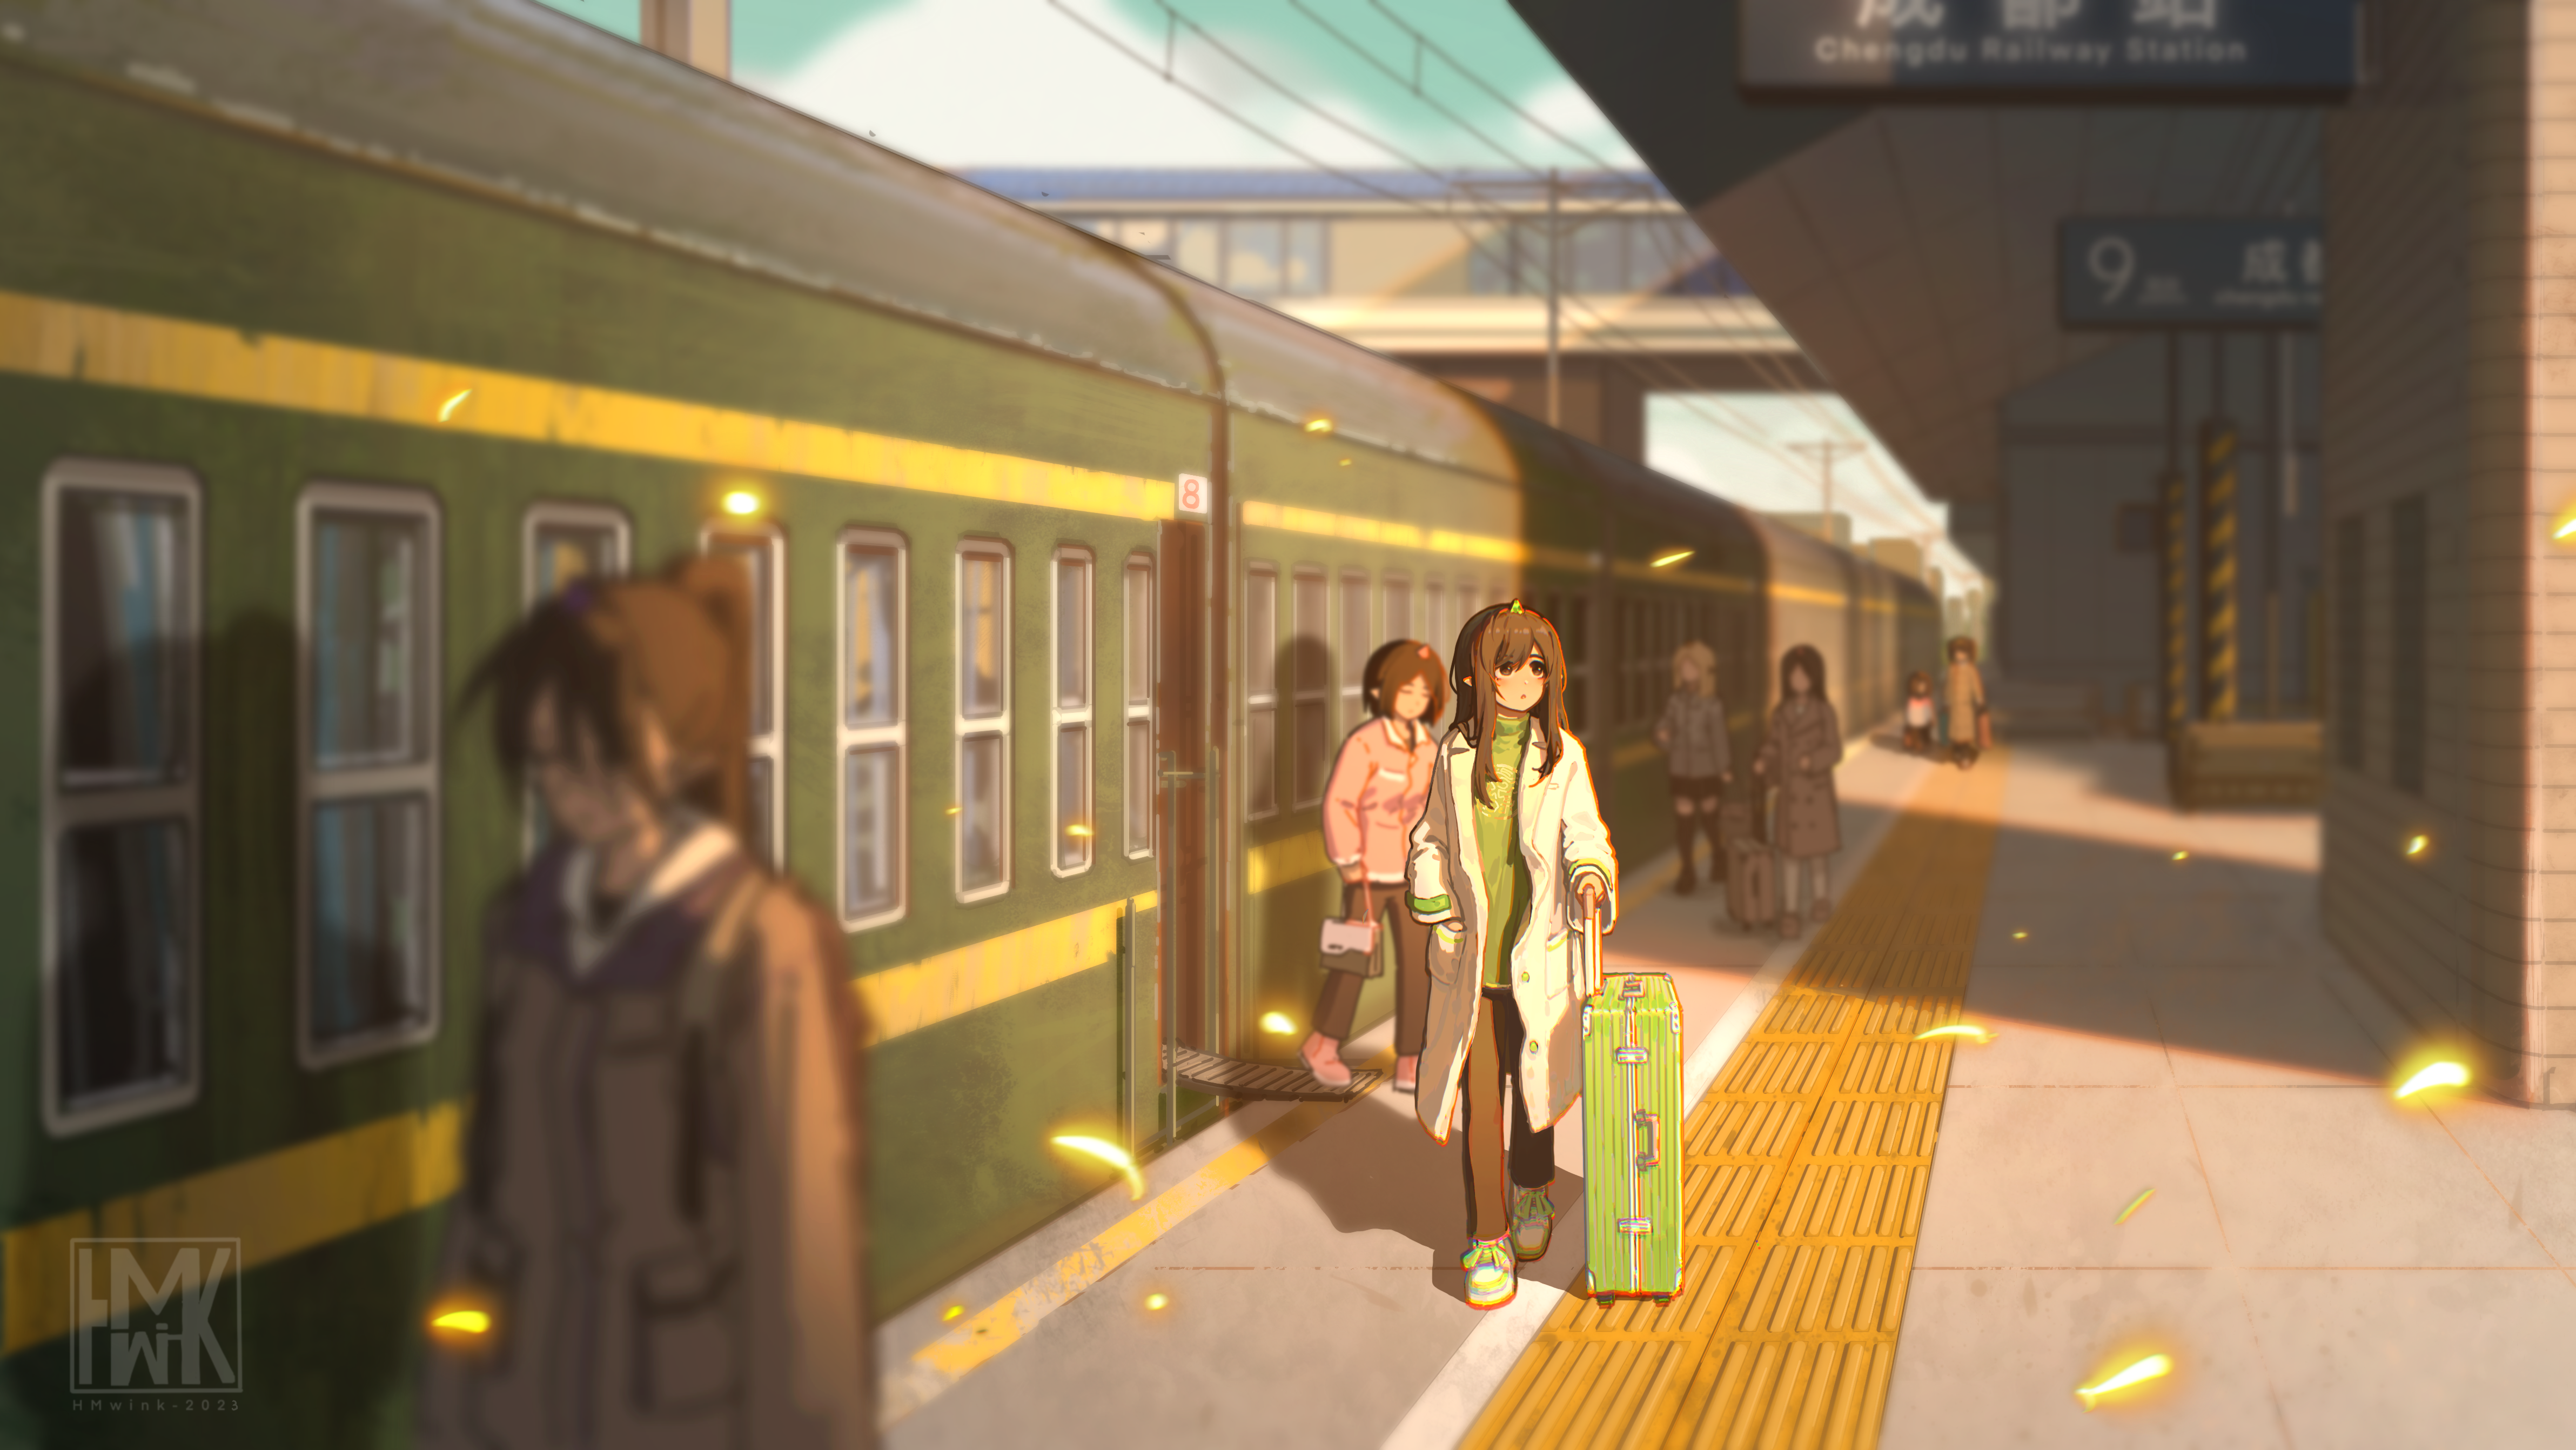 Hua Ming Wink Anime Girls Digital Art Artwork Petals Pointy Ears Walking Train Train Station Looking 4768x2683